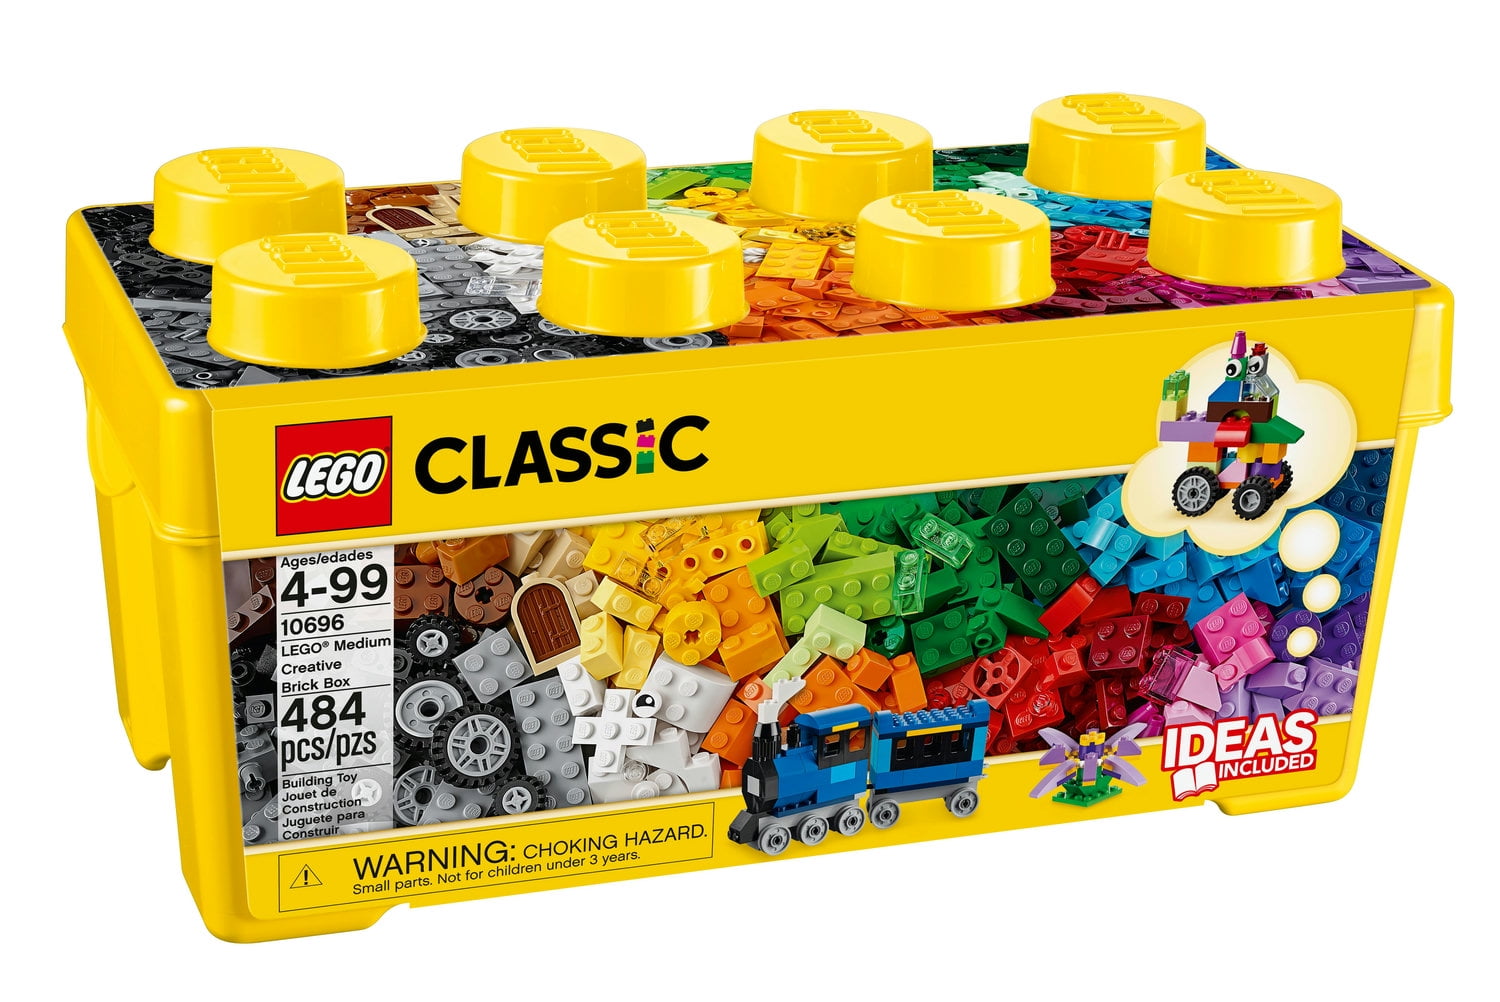 Wholesale Bundle Job Lot Clearance Mixed Stock Toys Blocks Lego Compatible 8 Box 